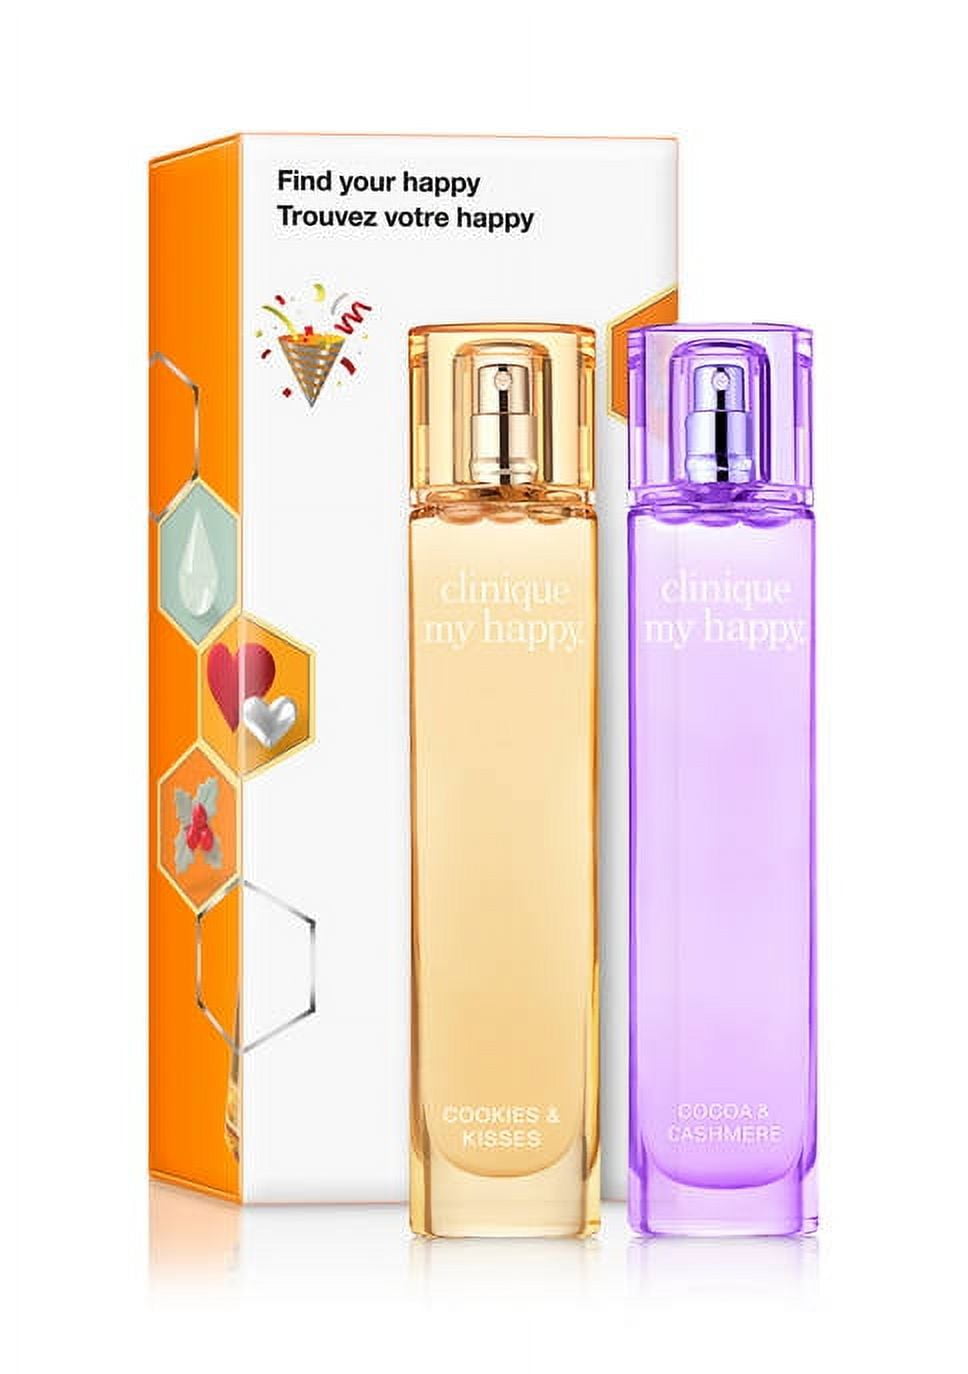 Clinique Happy Treats Fragrance Set